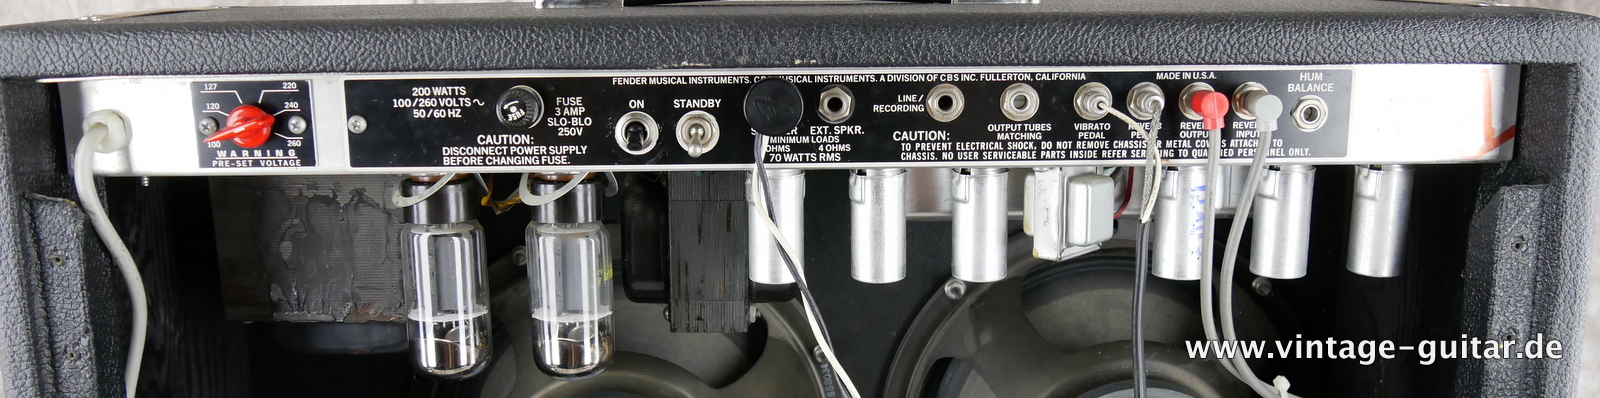 Fender-Super-Reverb-Combo-4x10-1980-black-tolex-007.JPG